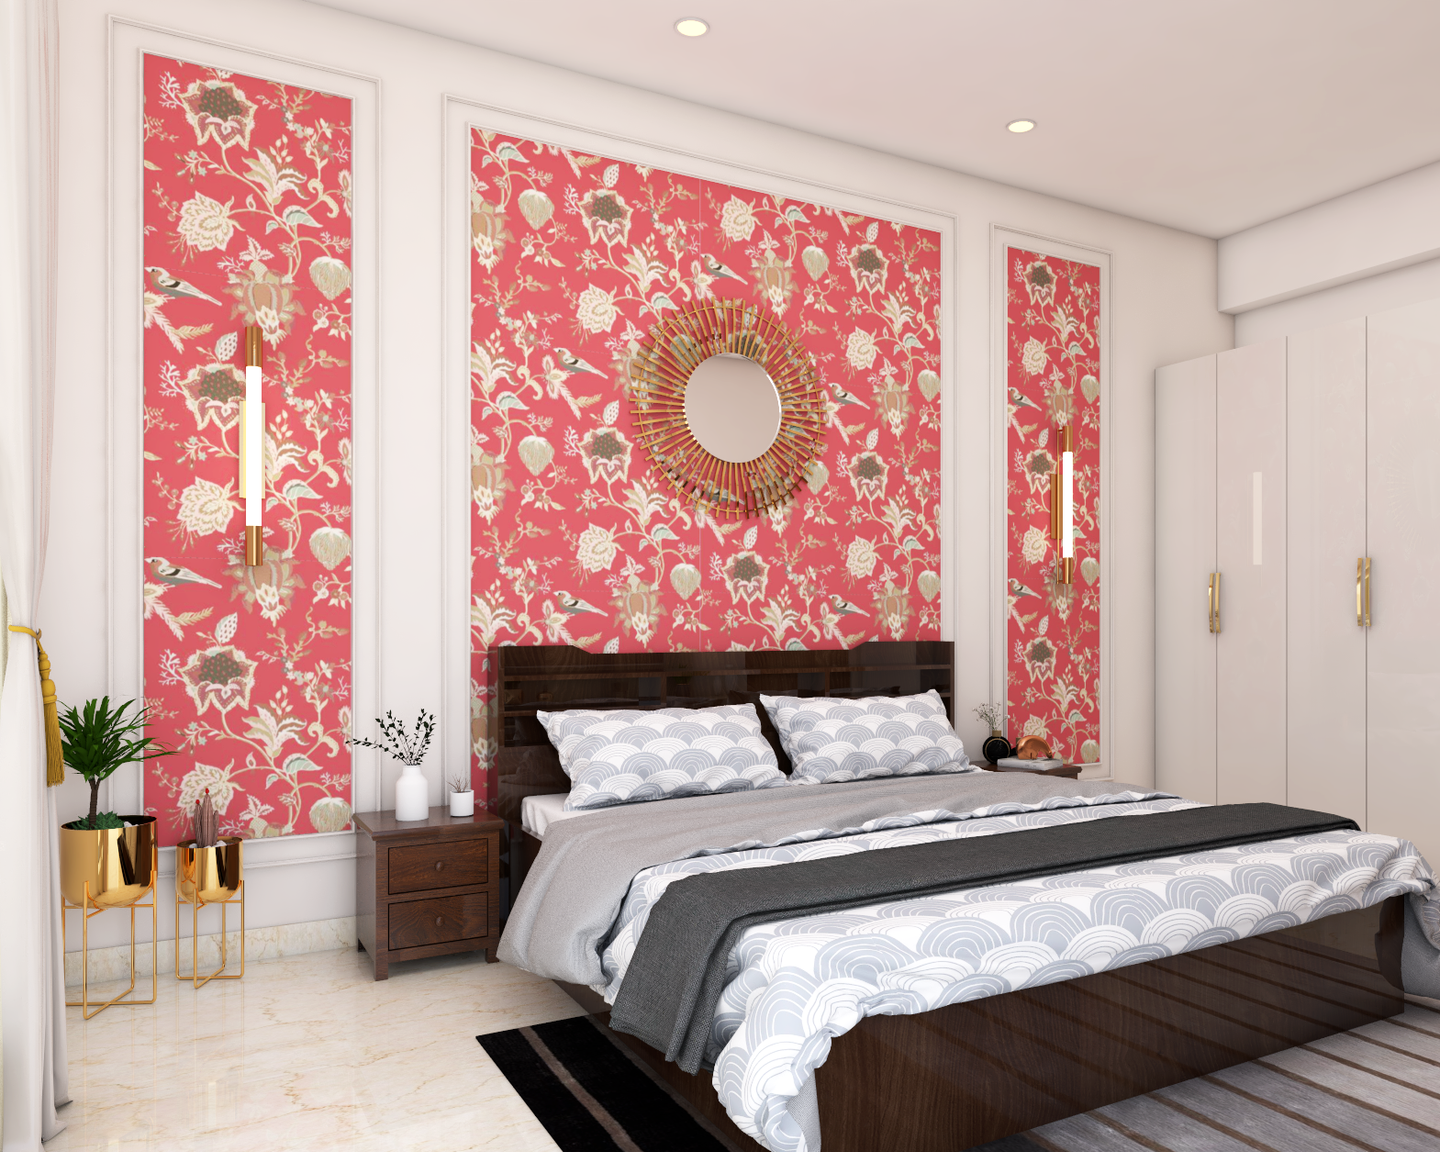 Convenient Guest Room With Classic Design Ideas - Livspace